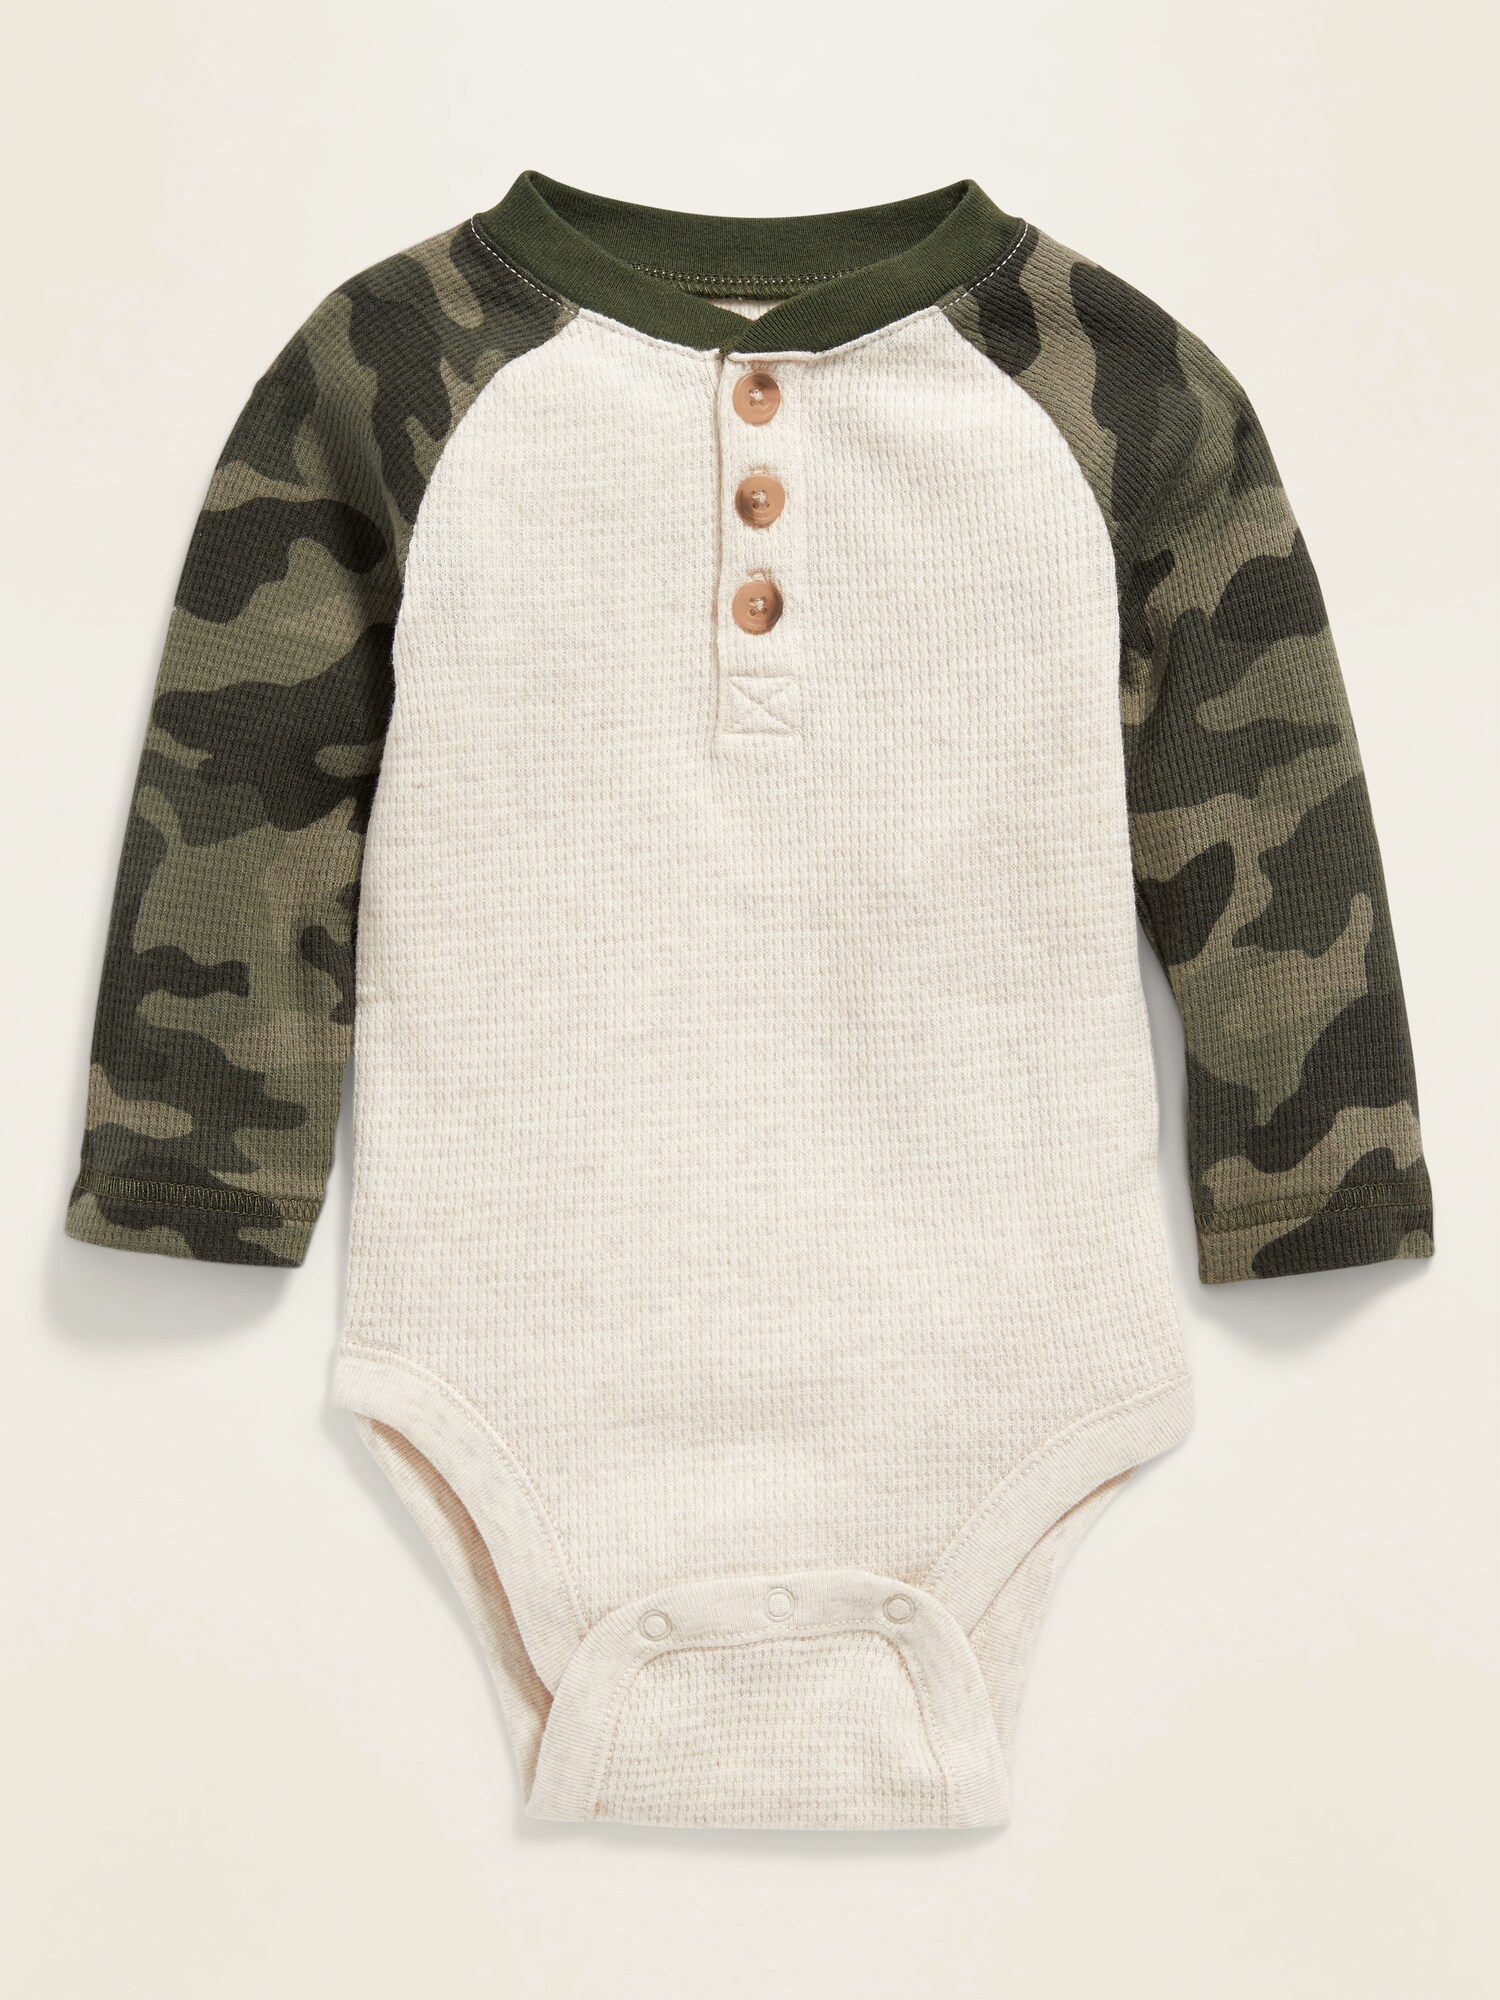 Unisex Thermal Henley Bodysuit for Baby